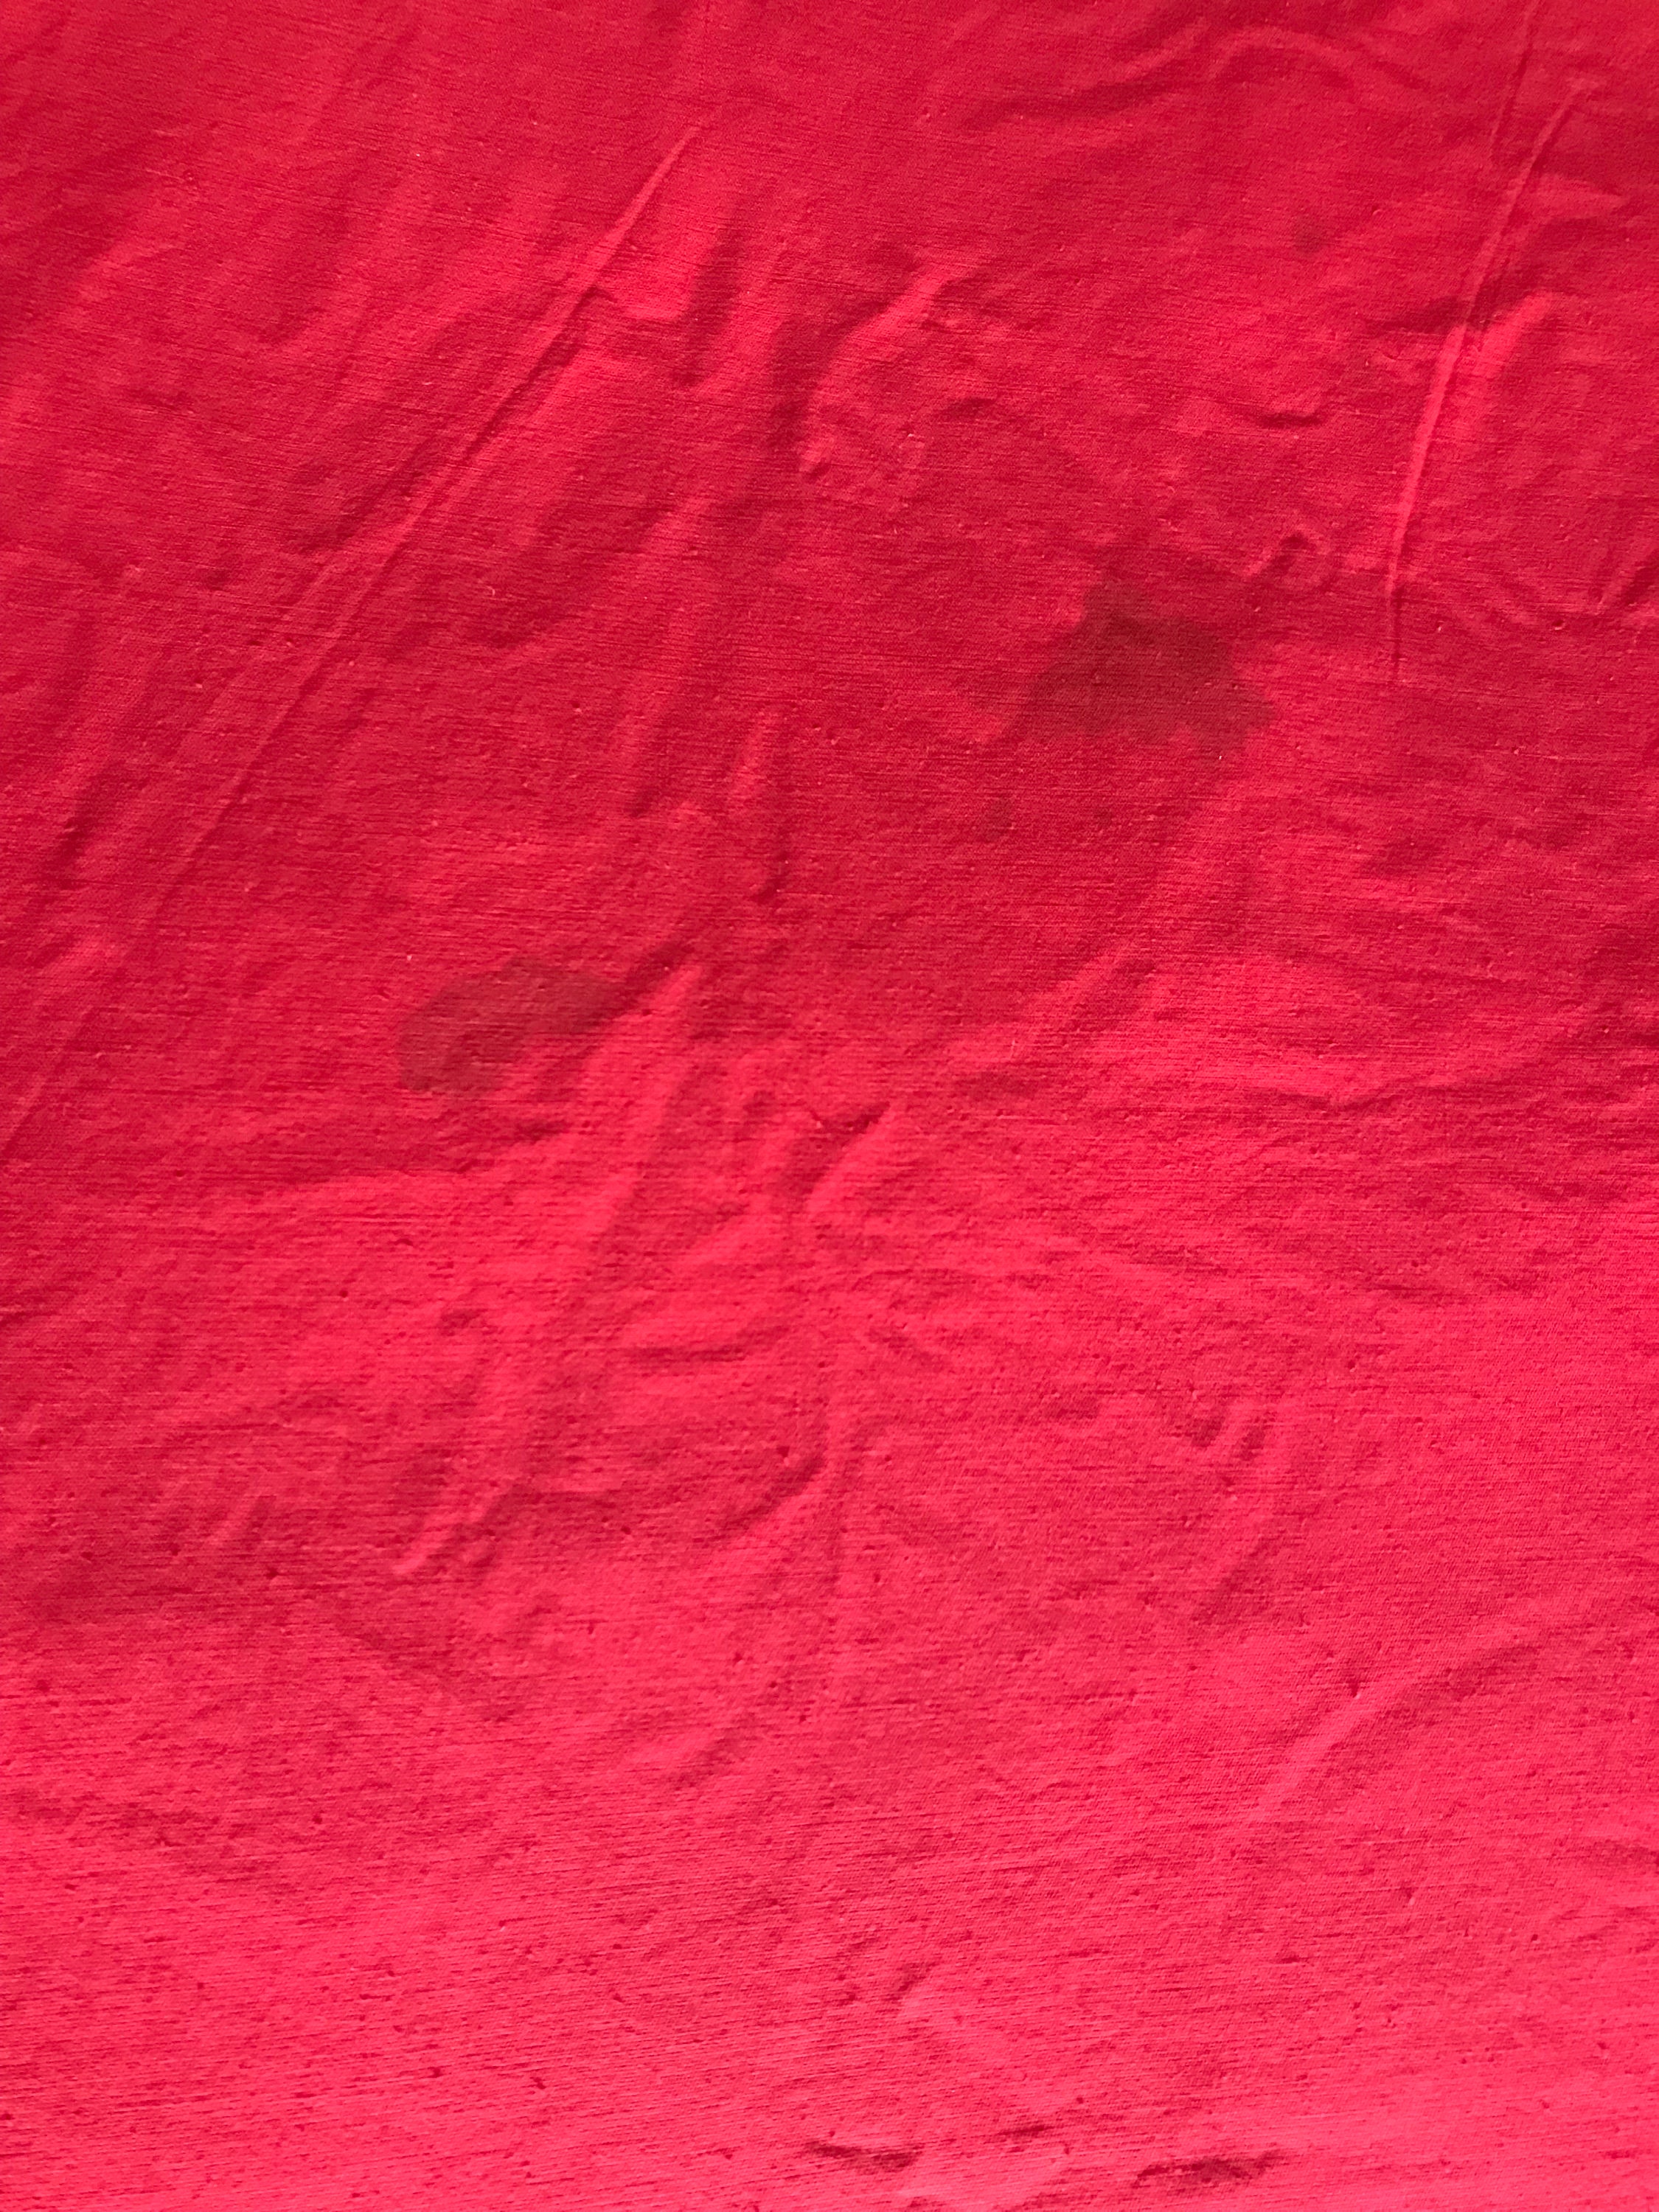 Vintage red velvet tablecloth with fringe Plush cover table | Etsy